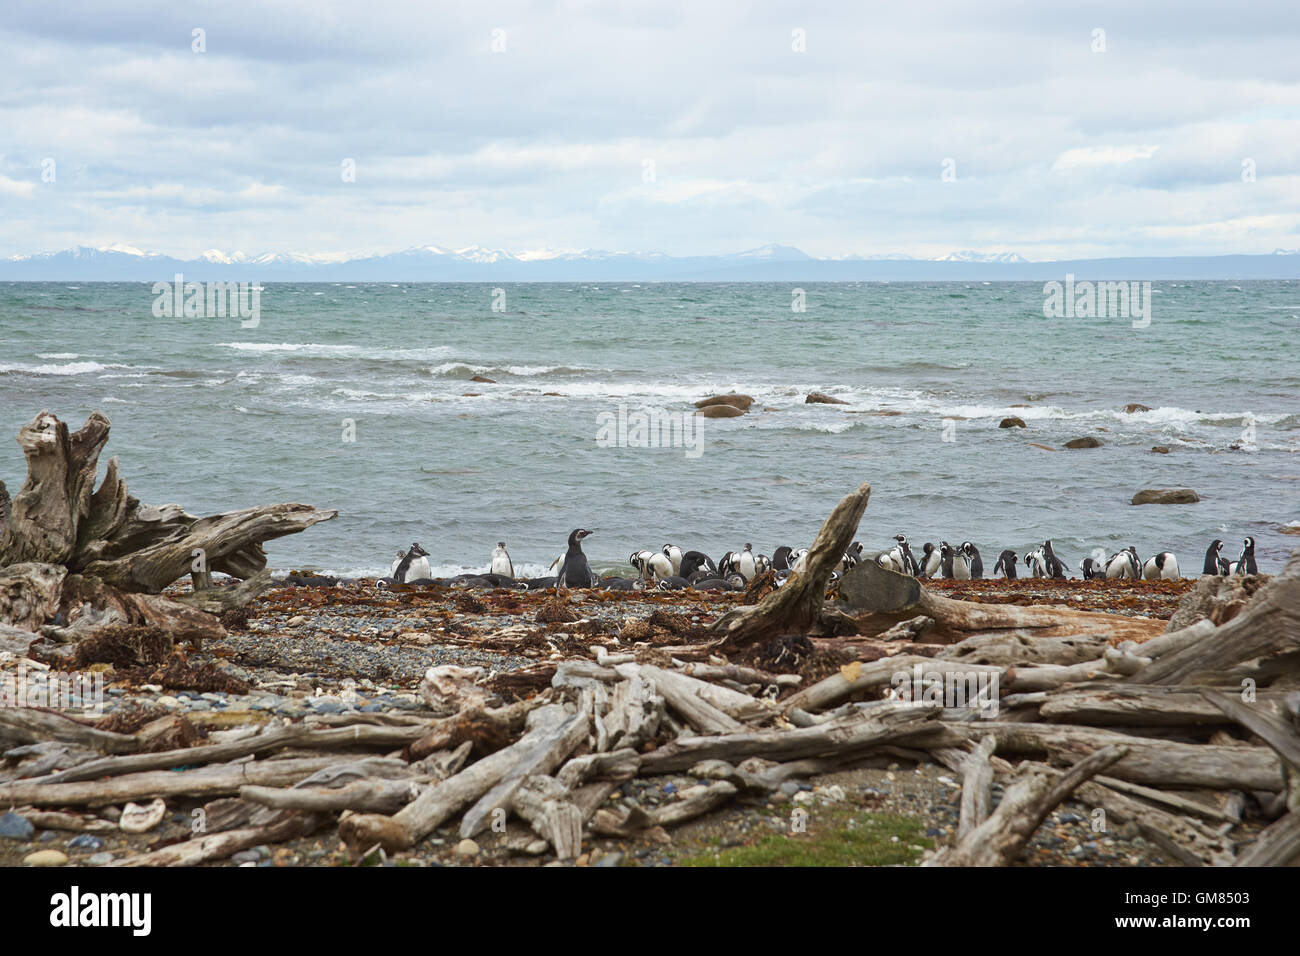 Colonia di i pinguini di Magellano (Spheniscus magellanicus) in Seno Otway vicino a Punta Arenas in Patagonia, Cile Foto Stock